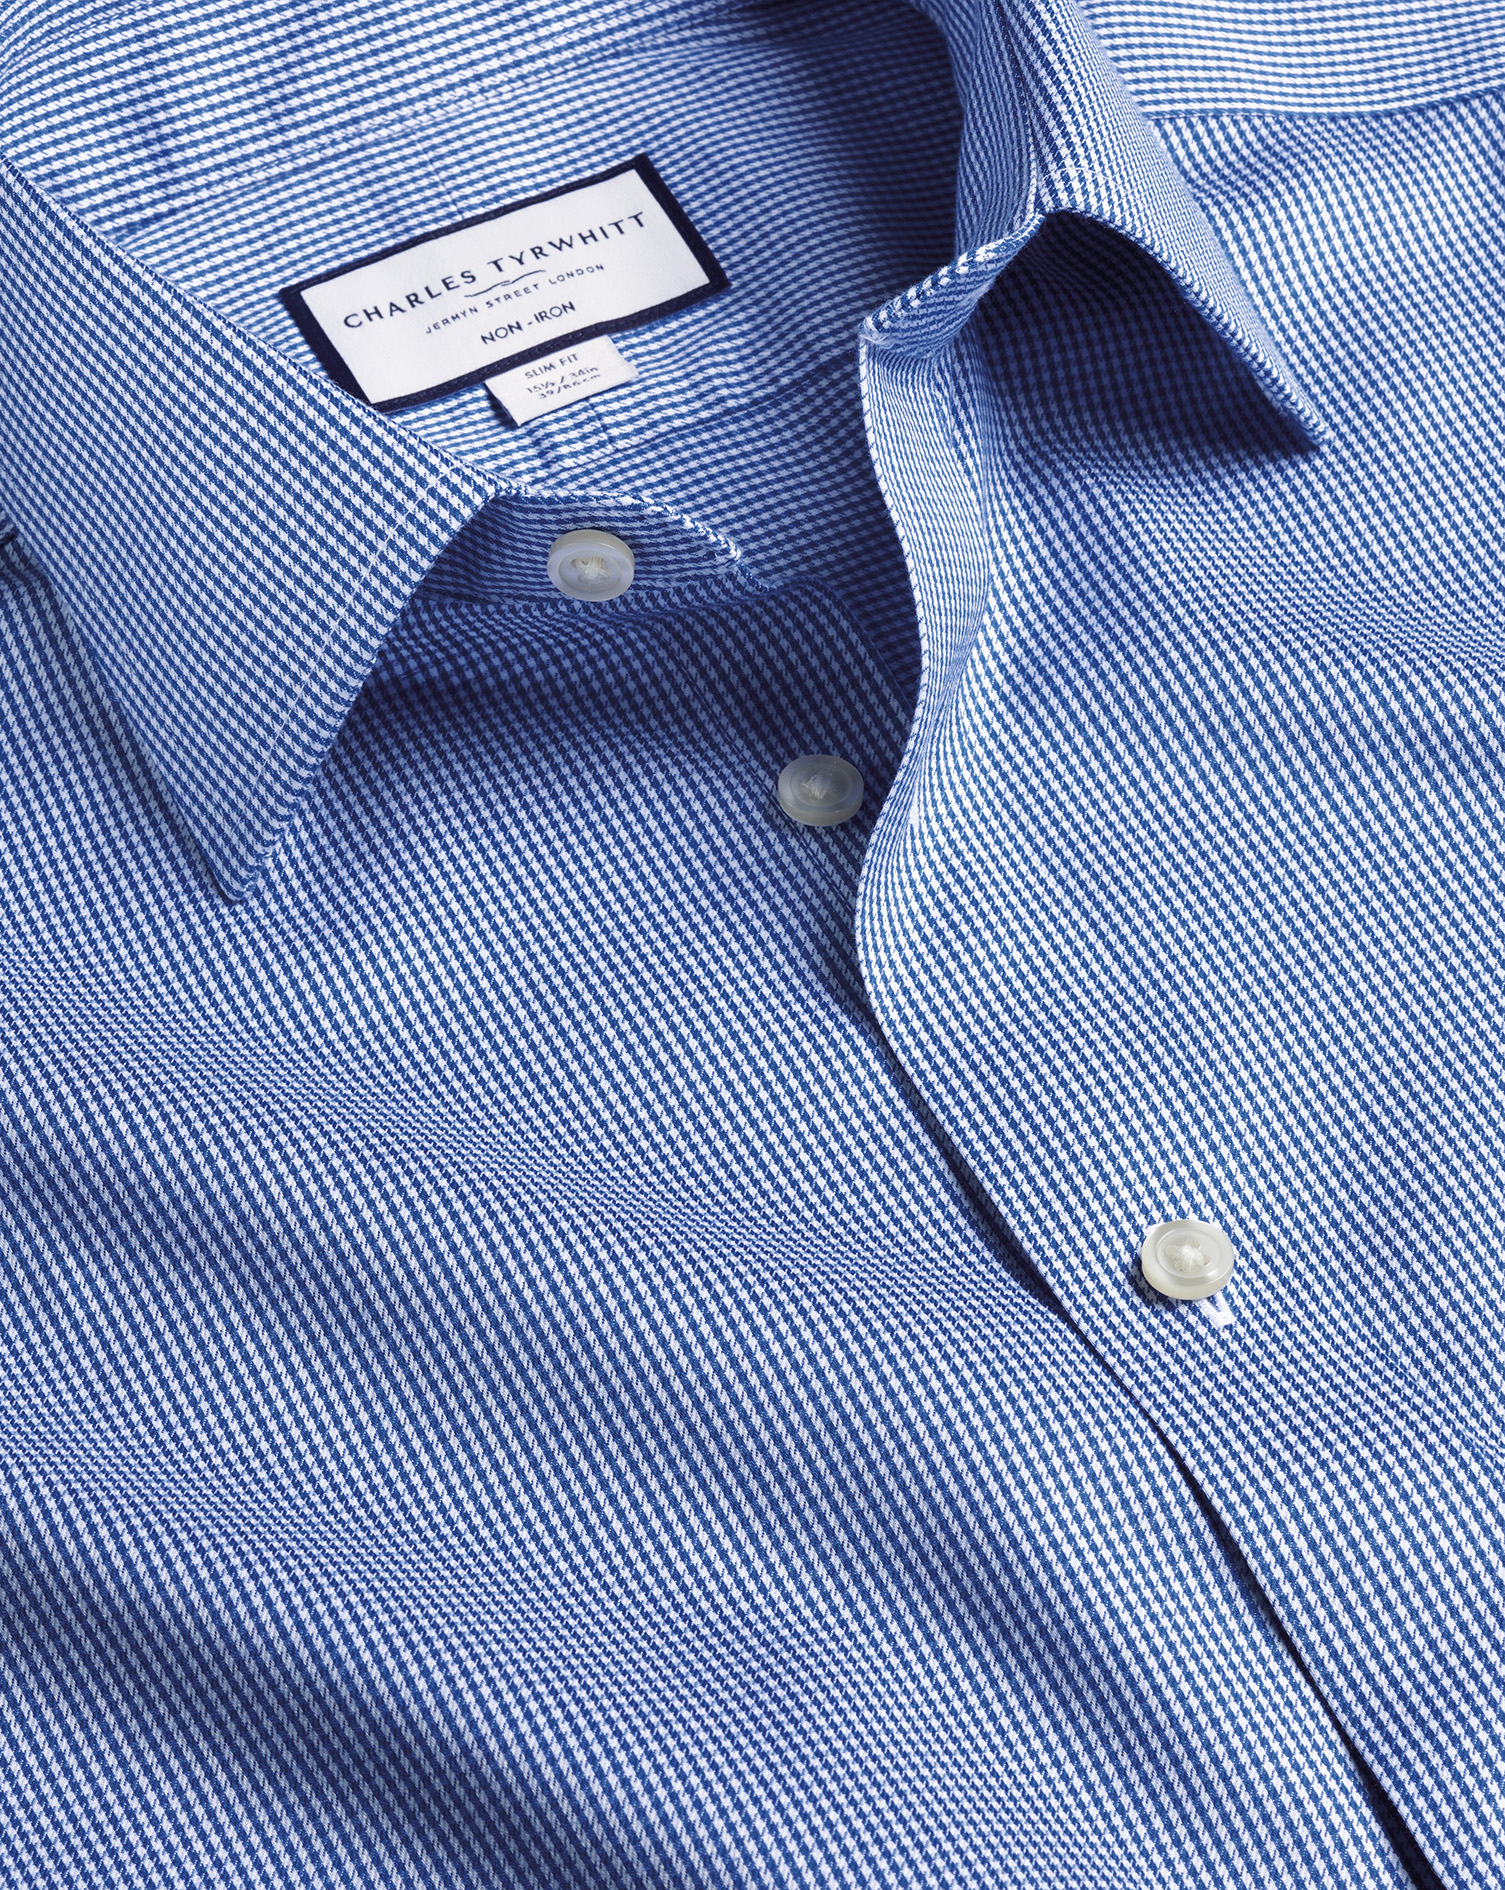 Men's Charles Tyrwhitt Non-Iron Puppytooth Dress Shirt - Royal Blue Single Cuff Size XL Cotton
